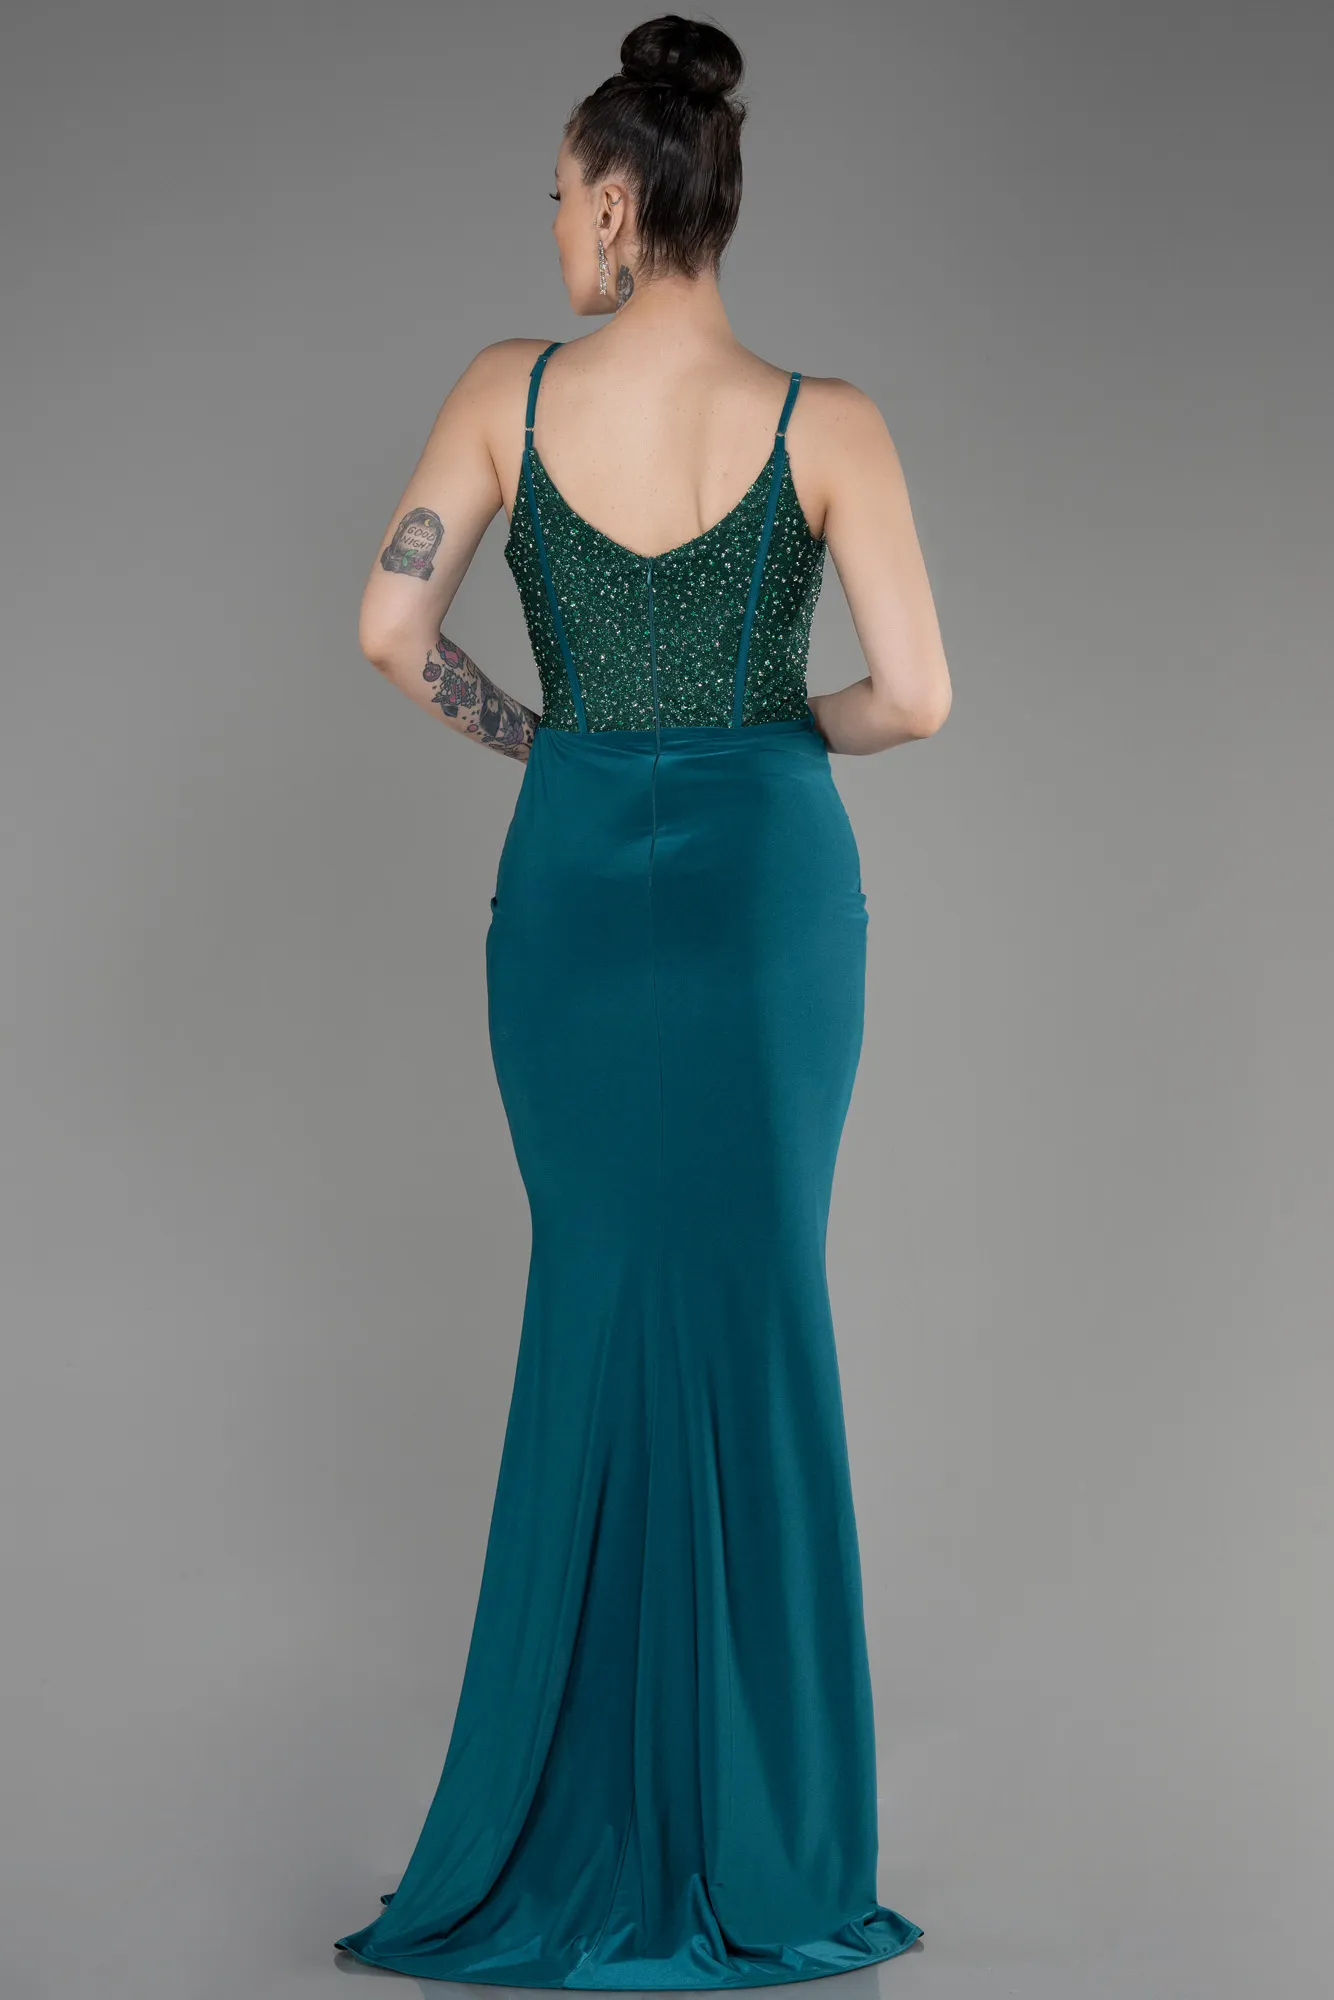 Emerald Green-Long Mermaid Prom Dress ABU3786